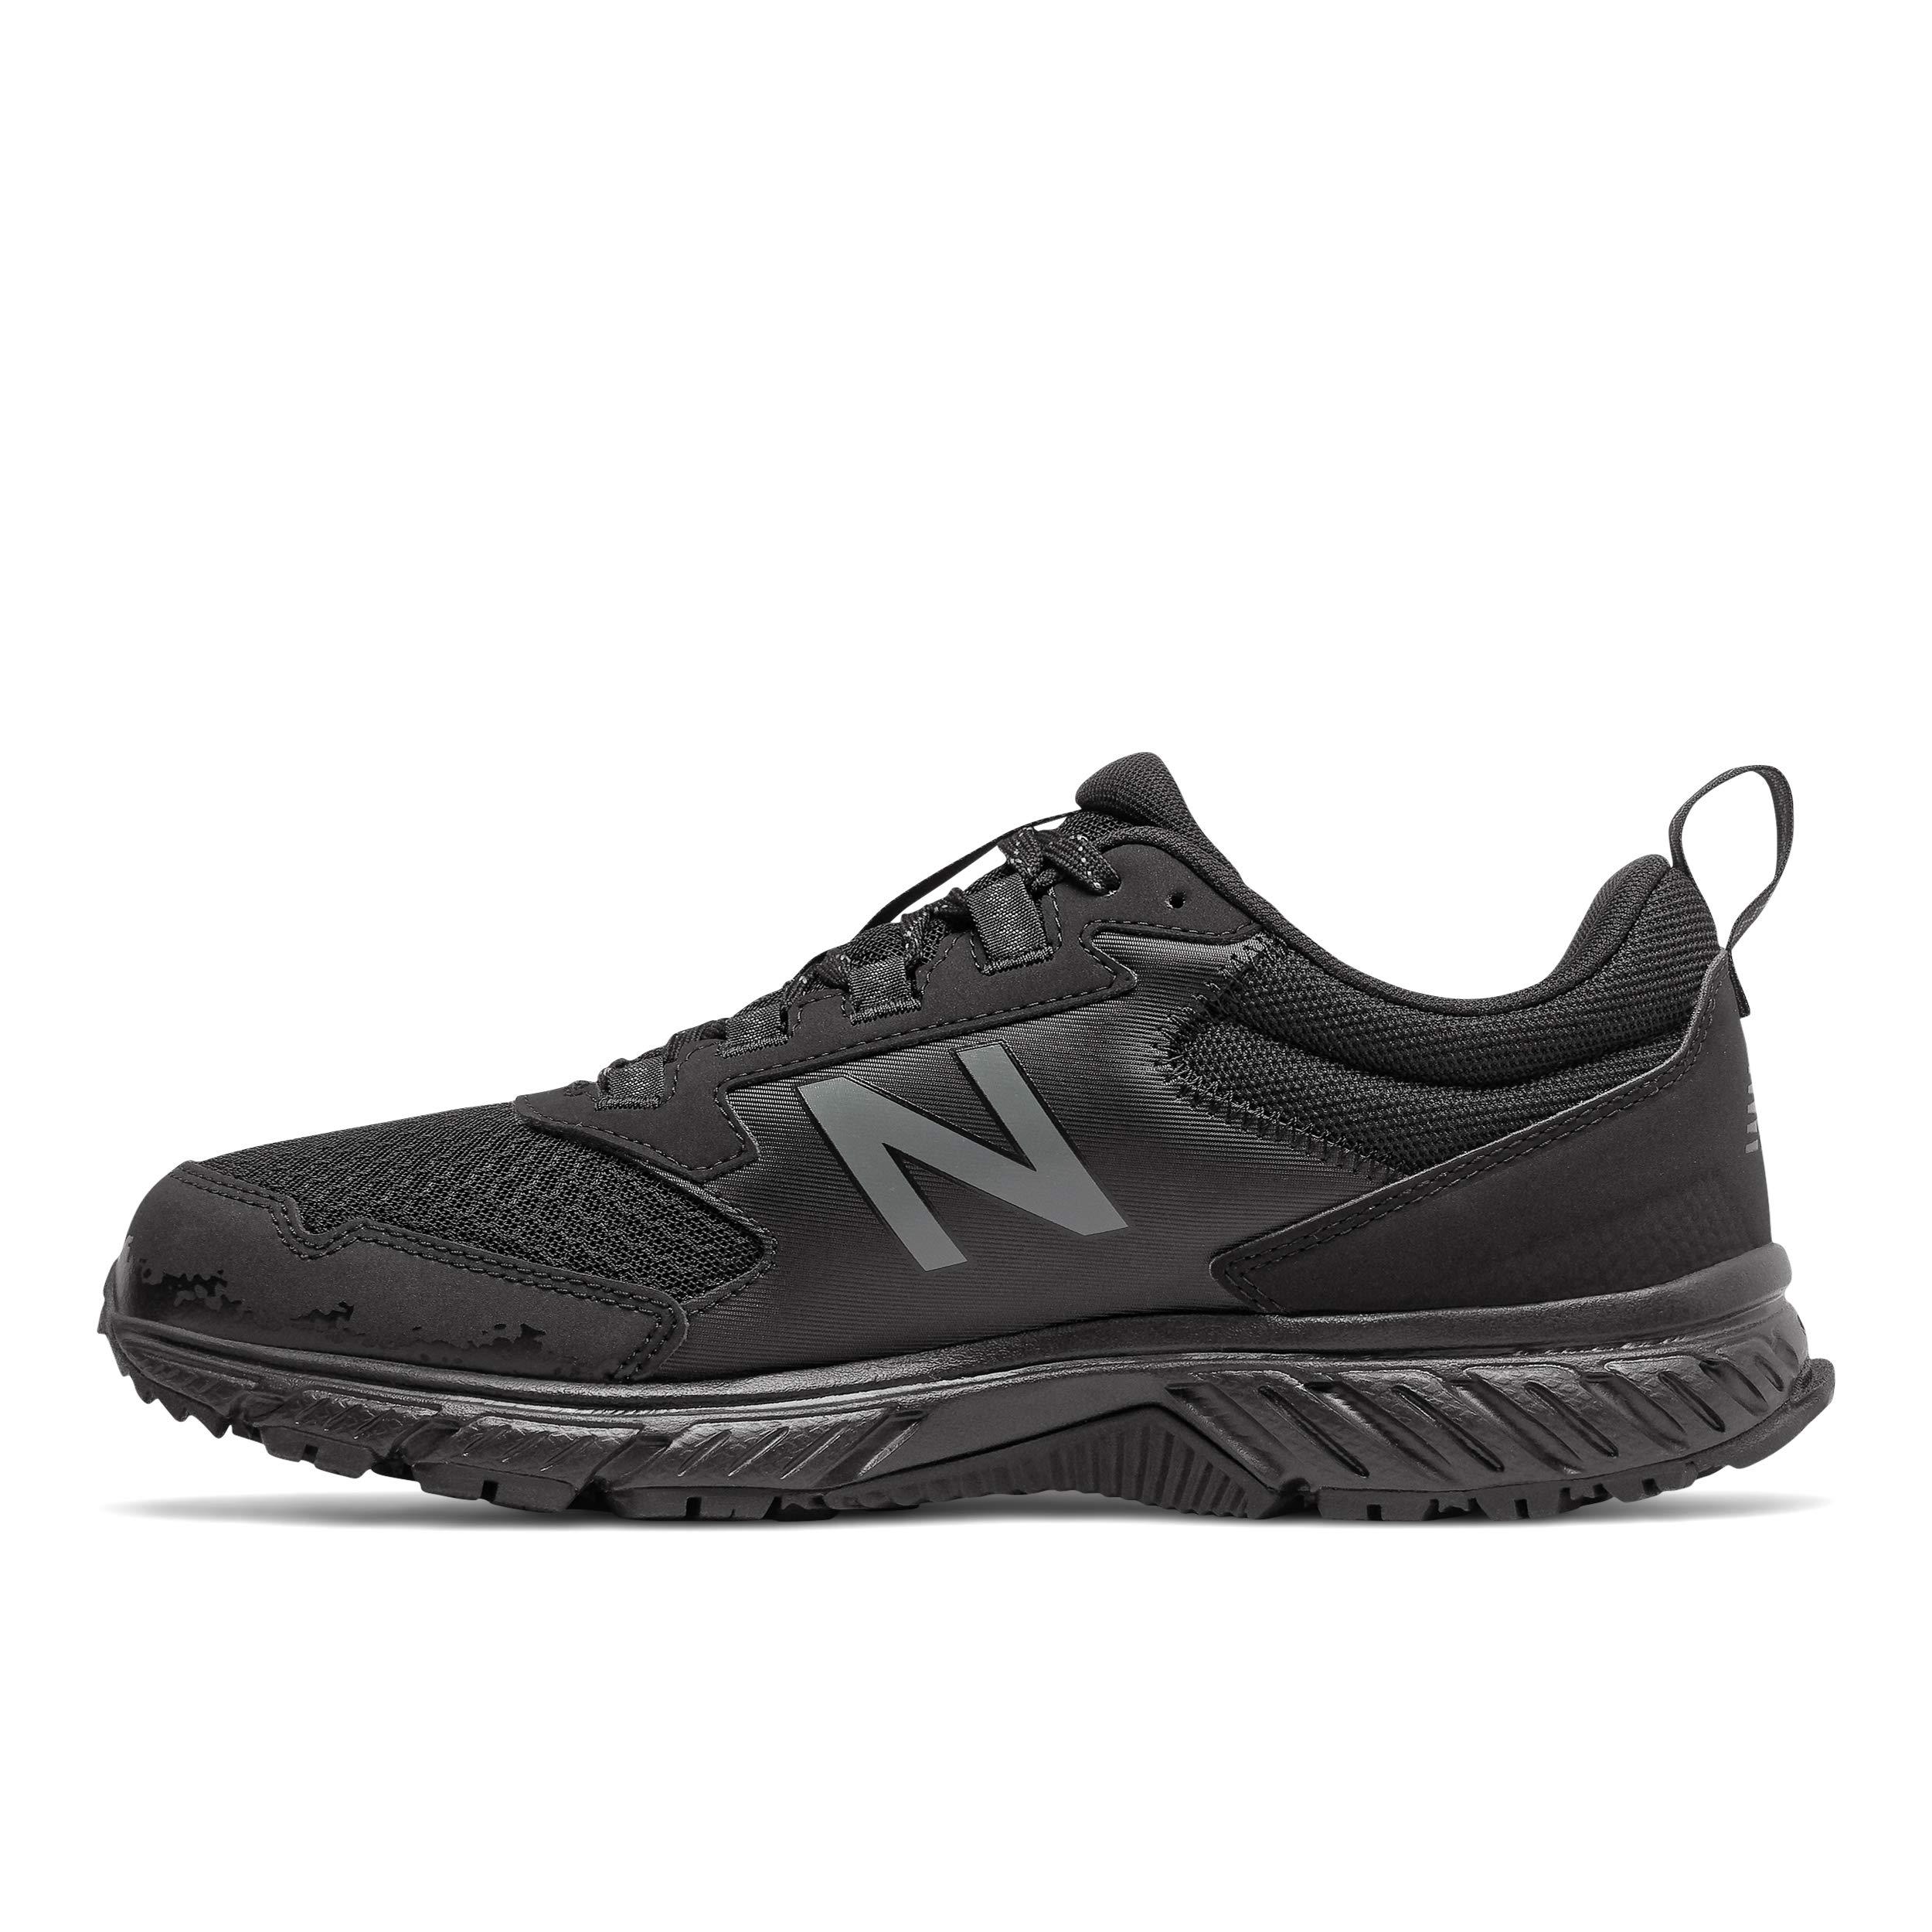 New Balance 510 V5 Trail Running Shoe in Black for Men - Save 7% - Lyst